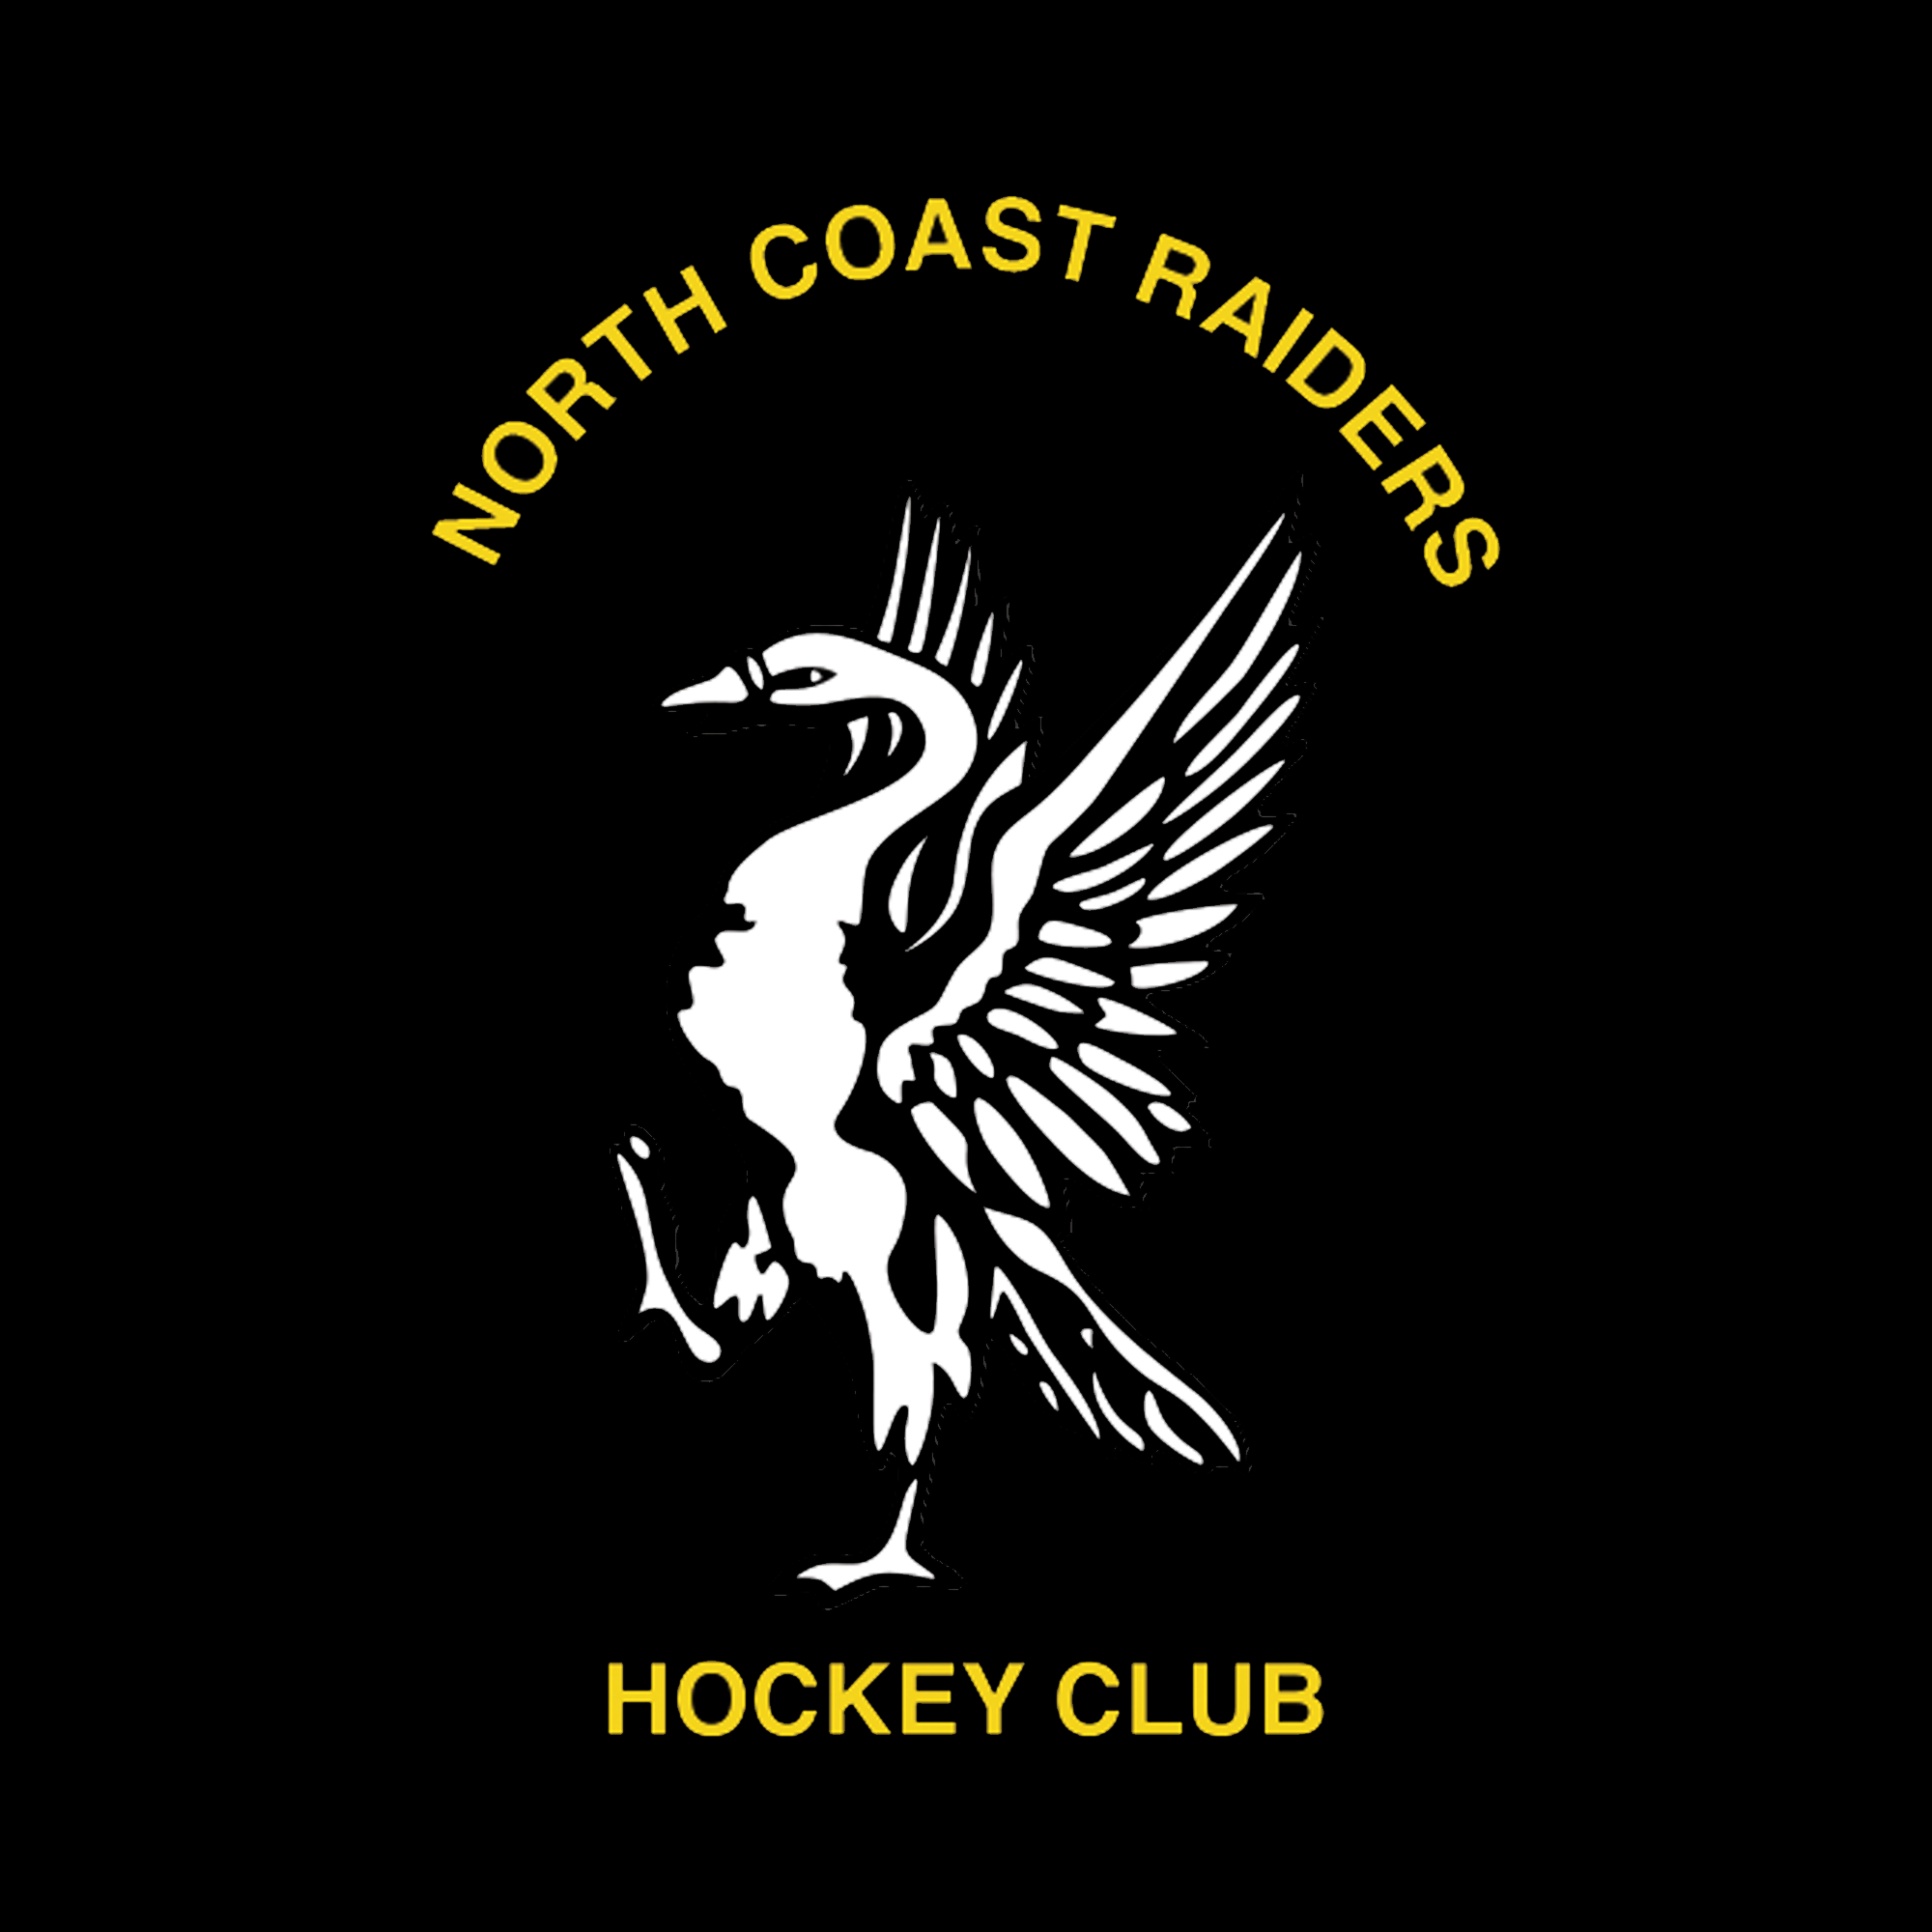 North Coast Raiders Hockey Club